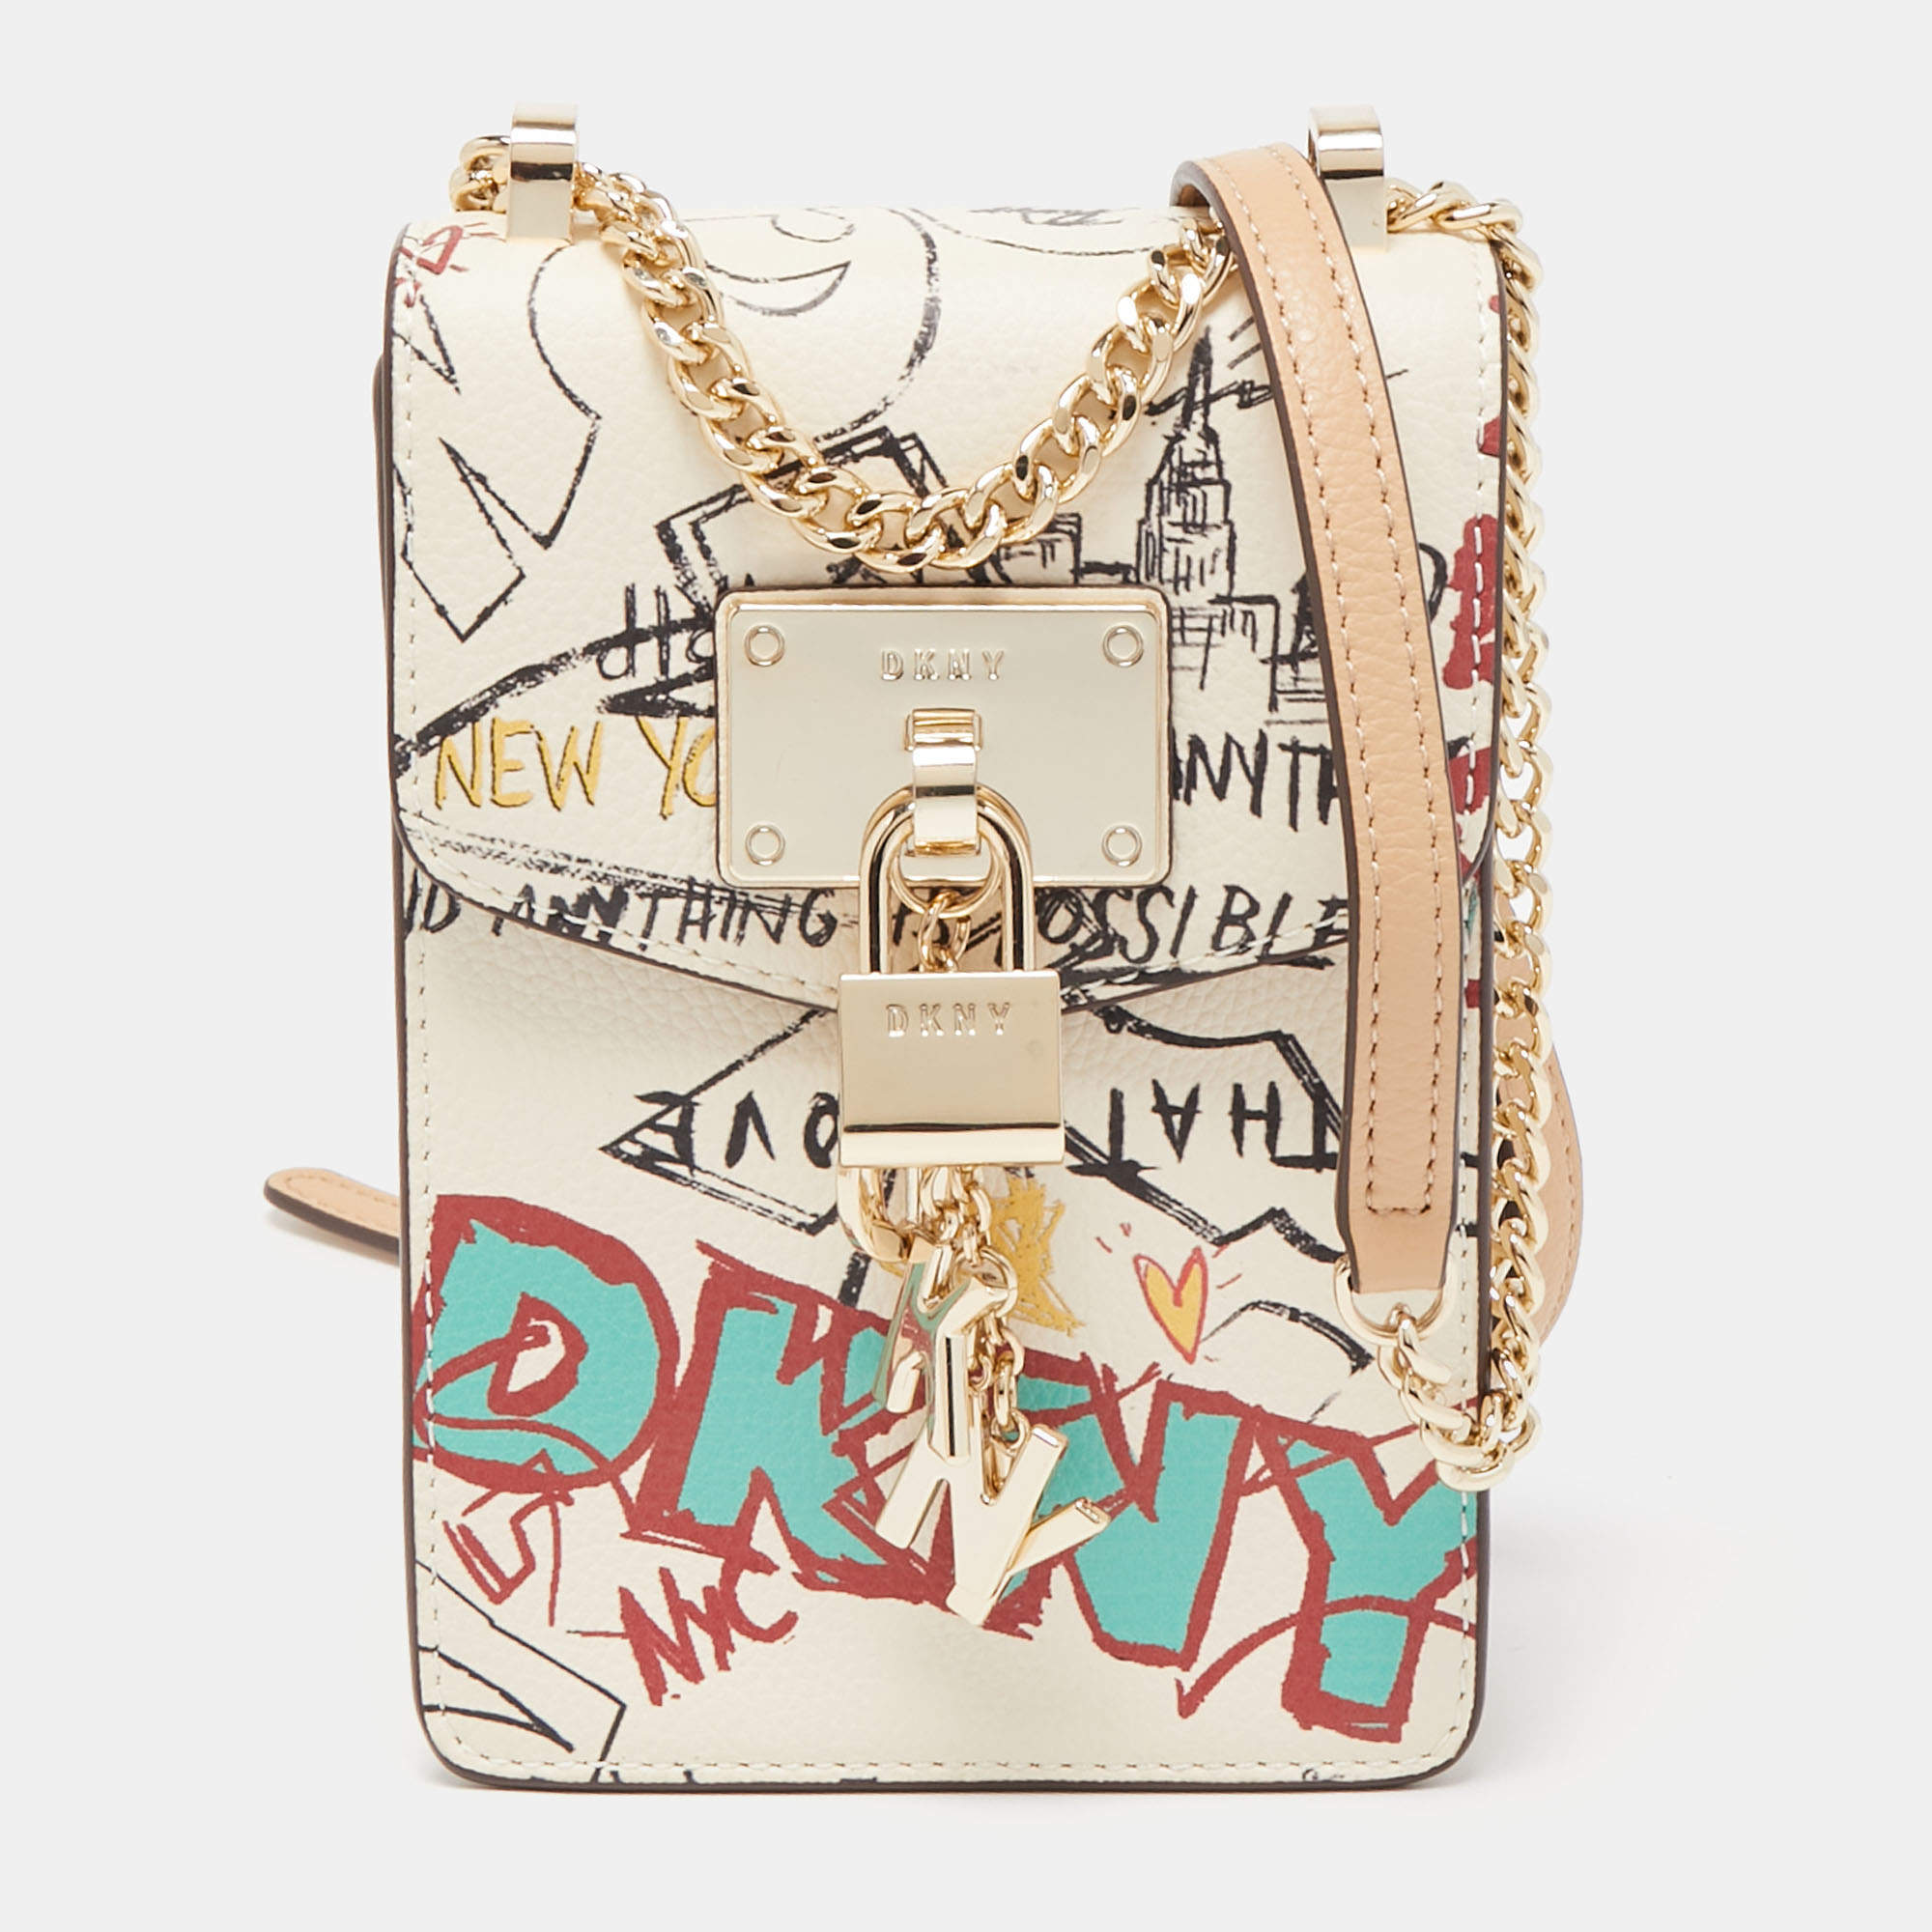 DKNY Bags Latest Styles